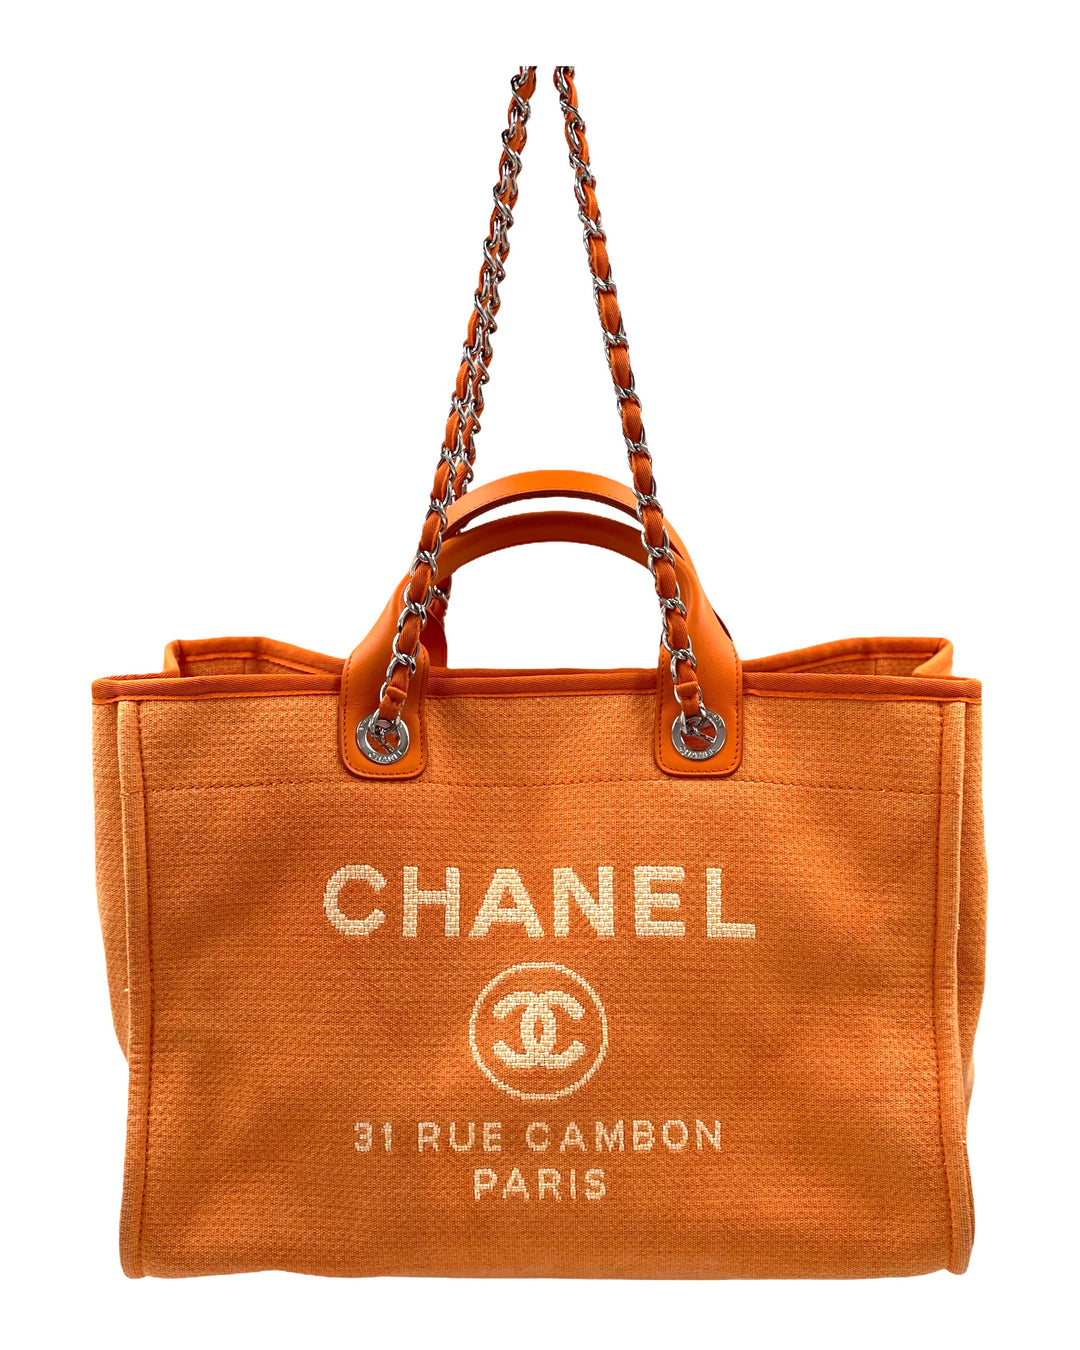 Chanel Deauville Orange Bag